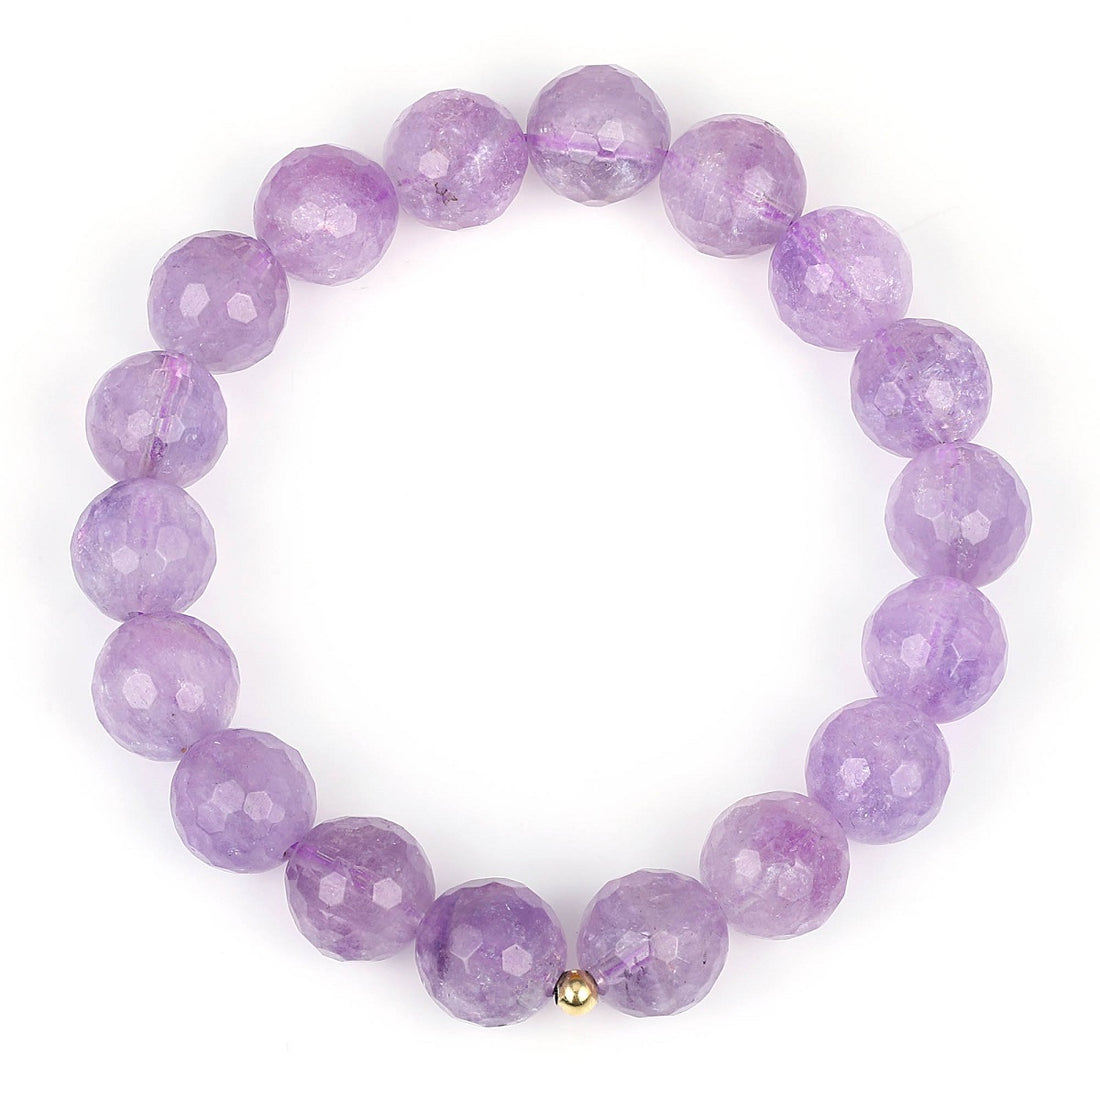 Lavender Amethyst Beads Stretch Bracelet